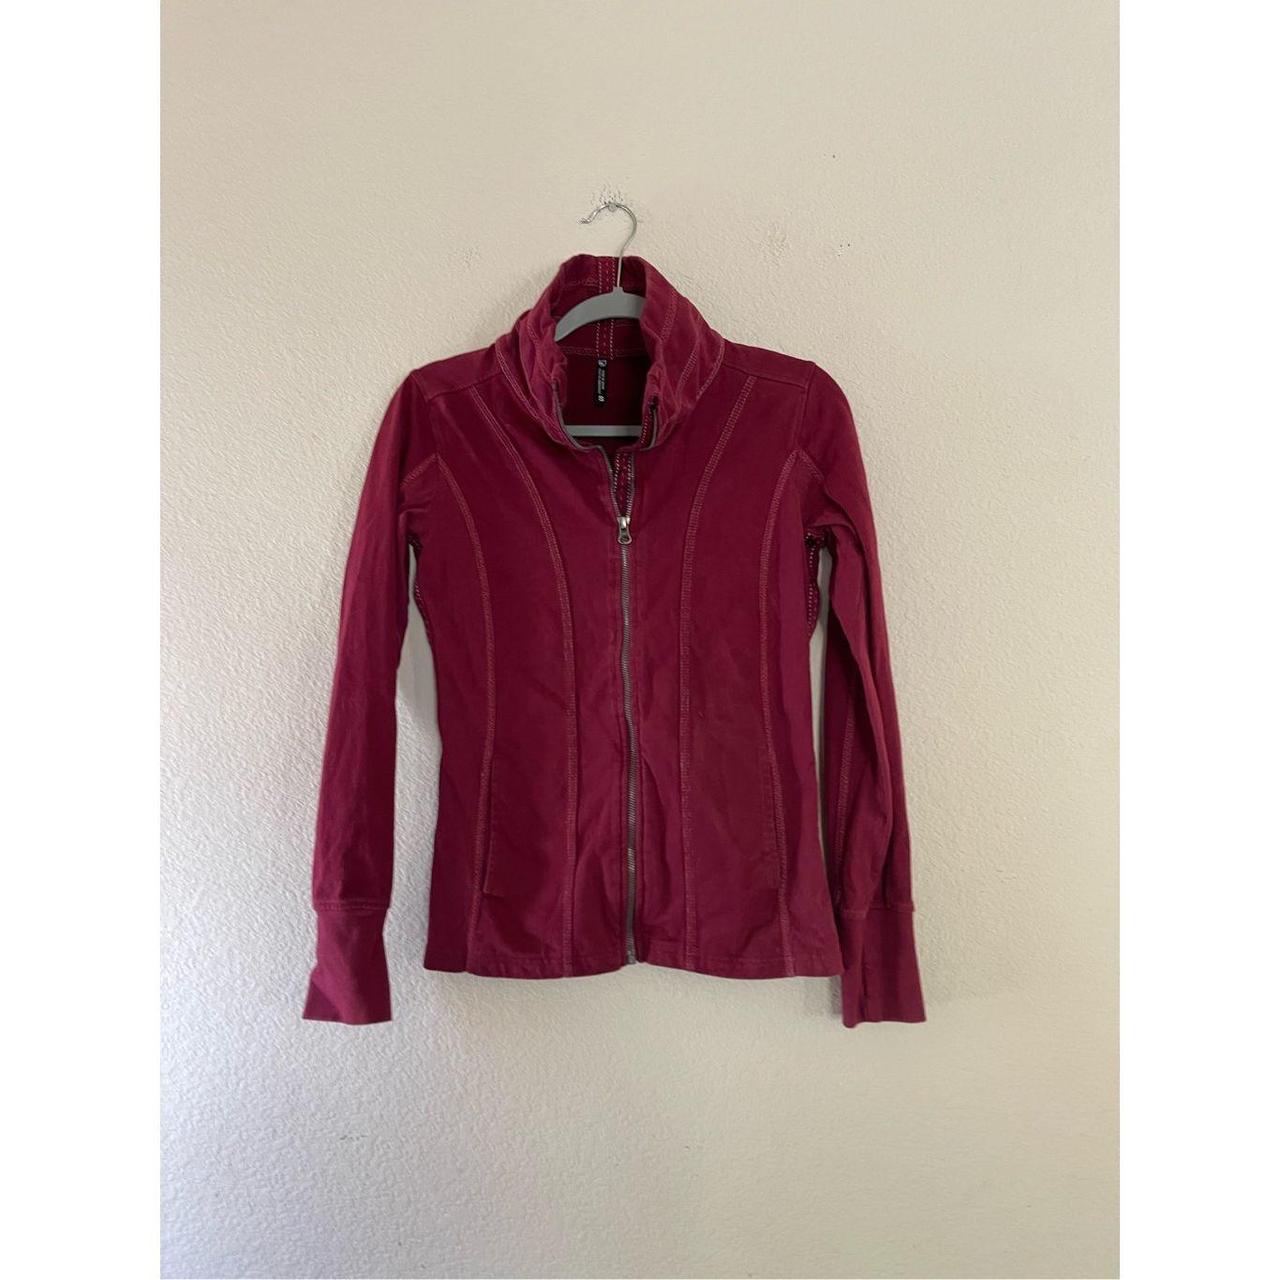 Kuhl Women's Kember Full Zip Jacket Red Organic Cotton size small